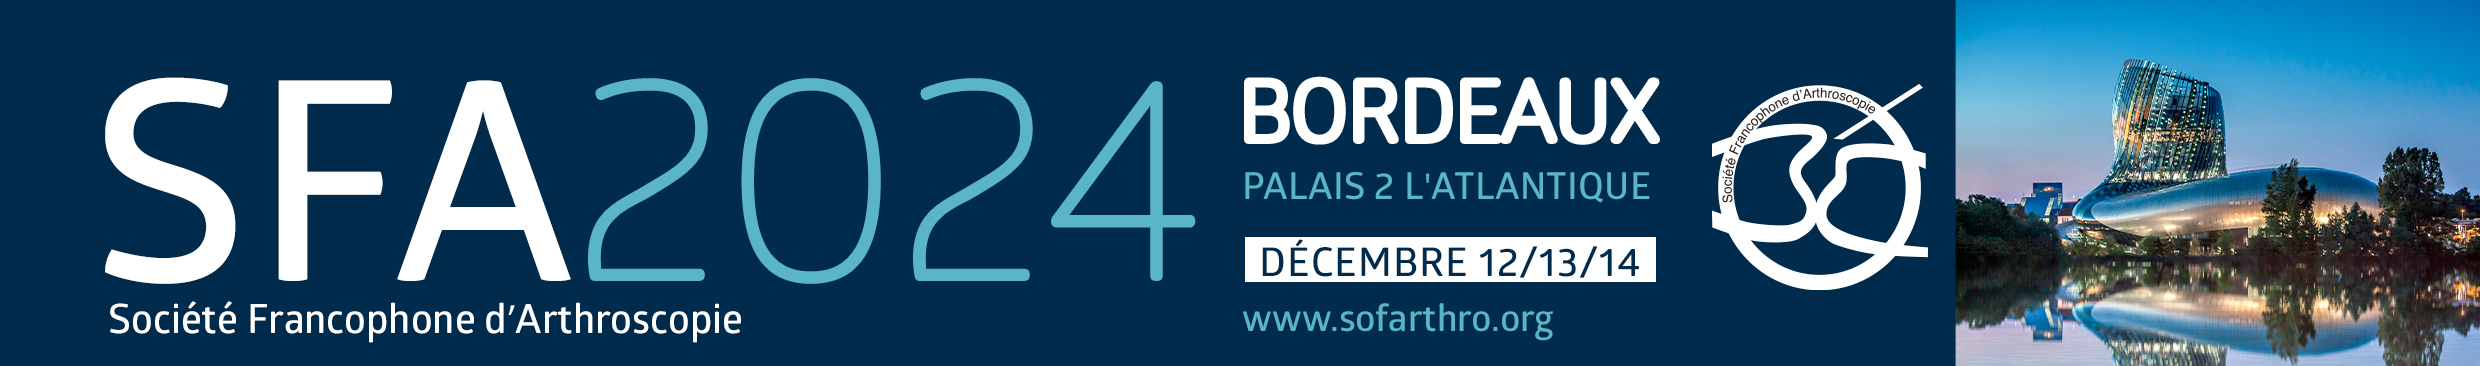 Congres SFA Bordeaux 2024